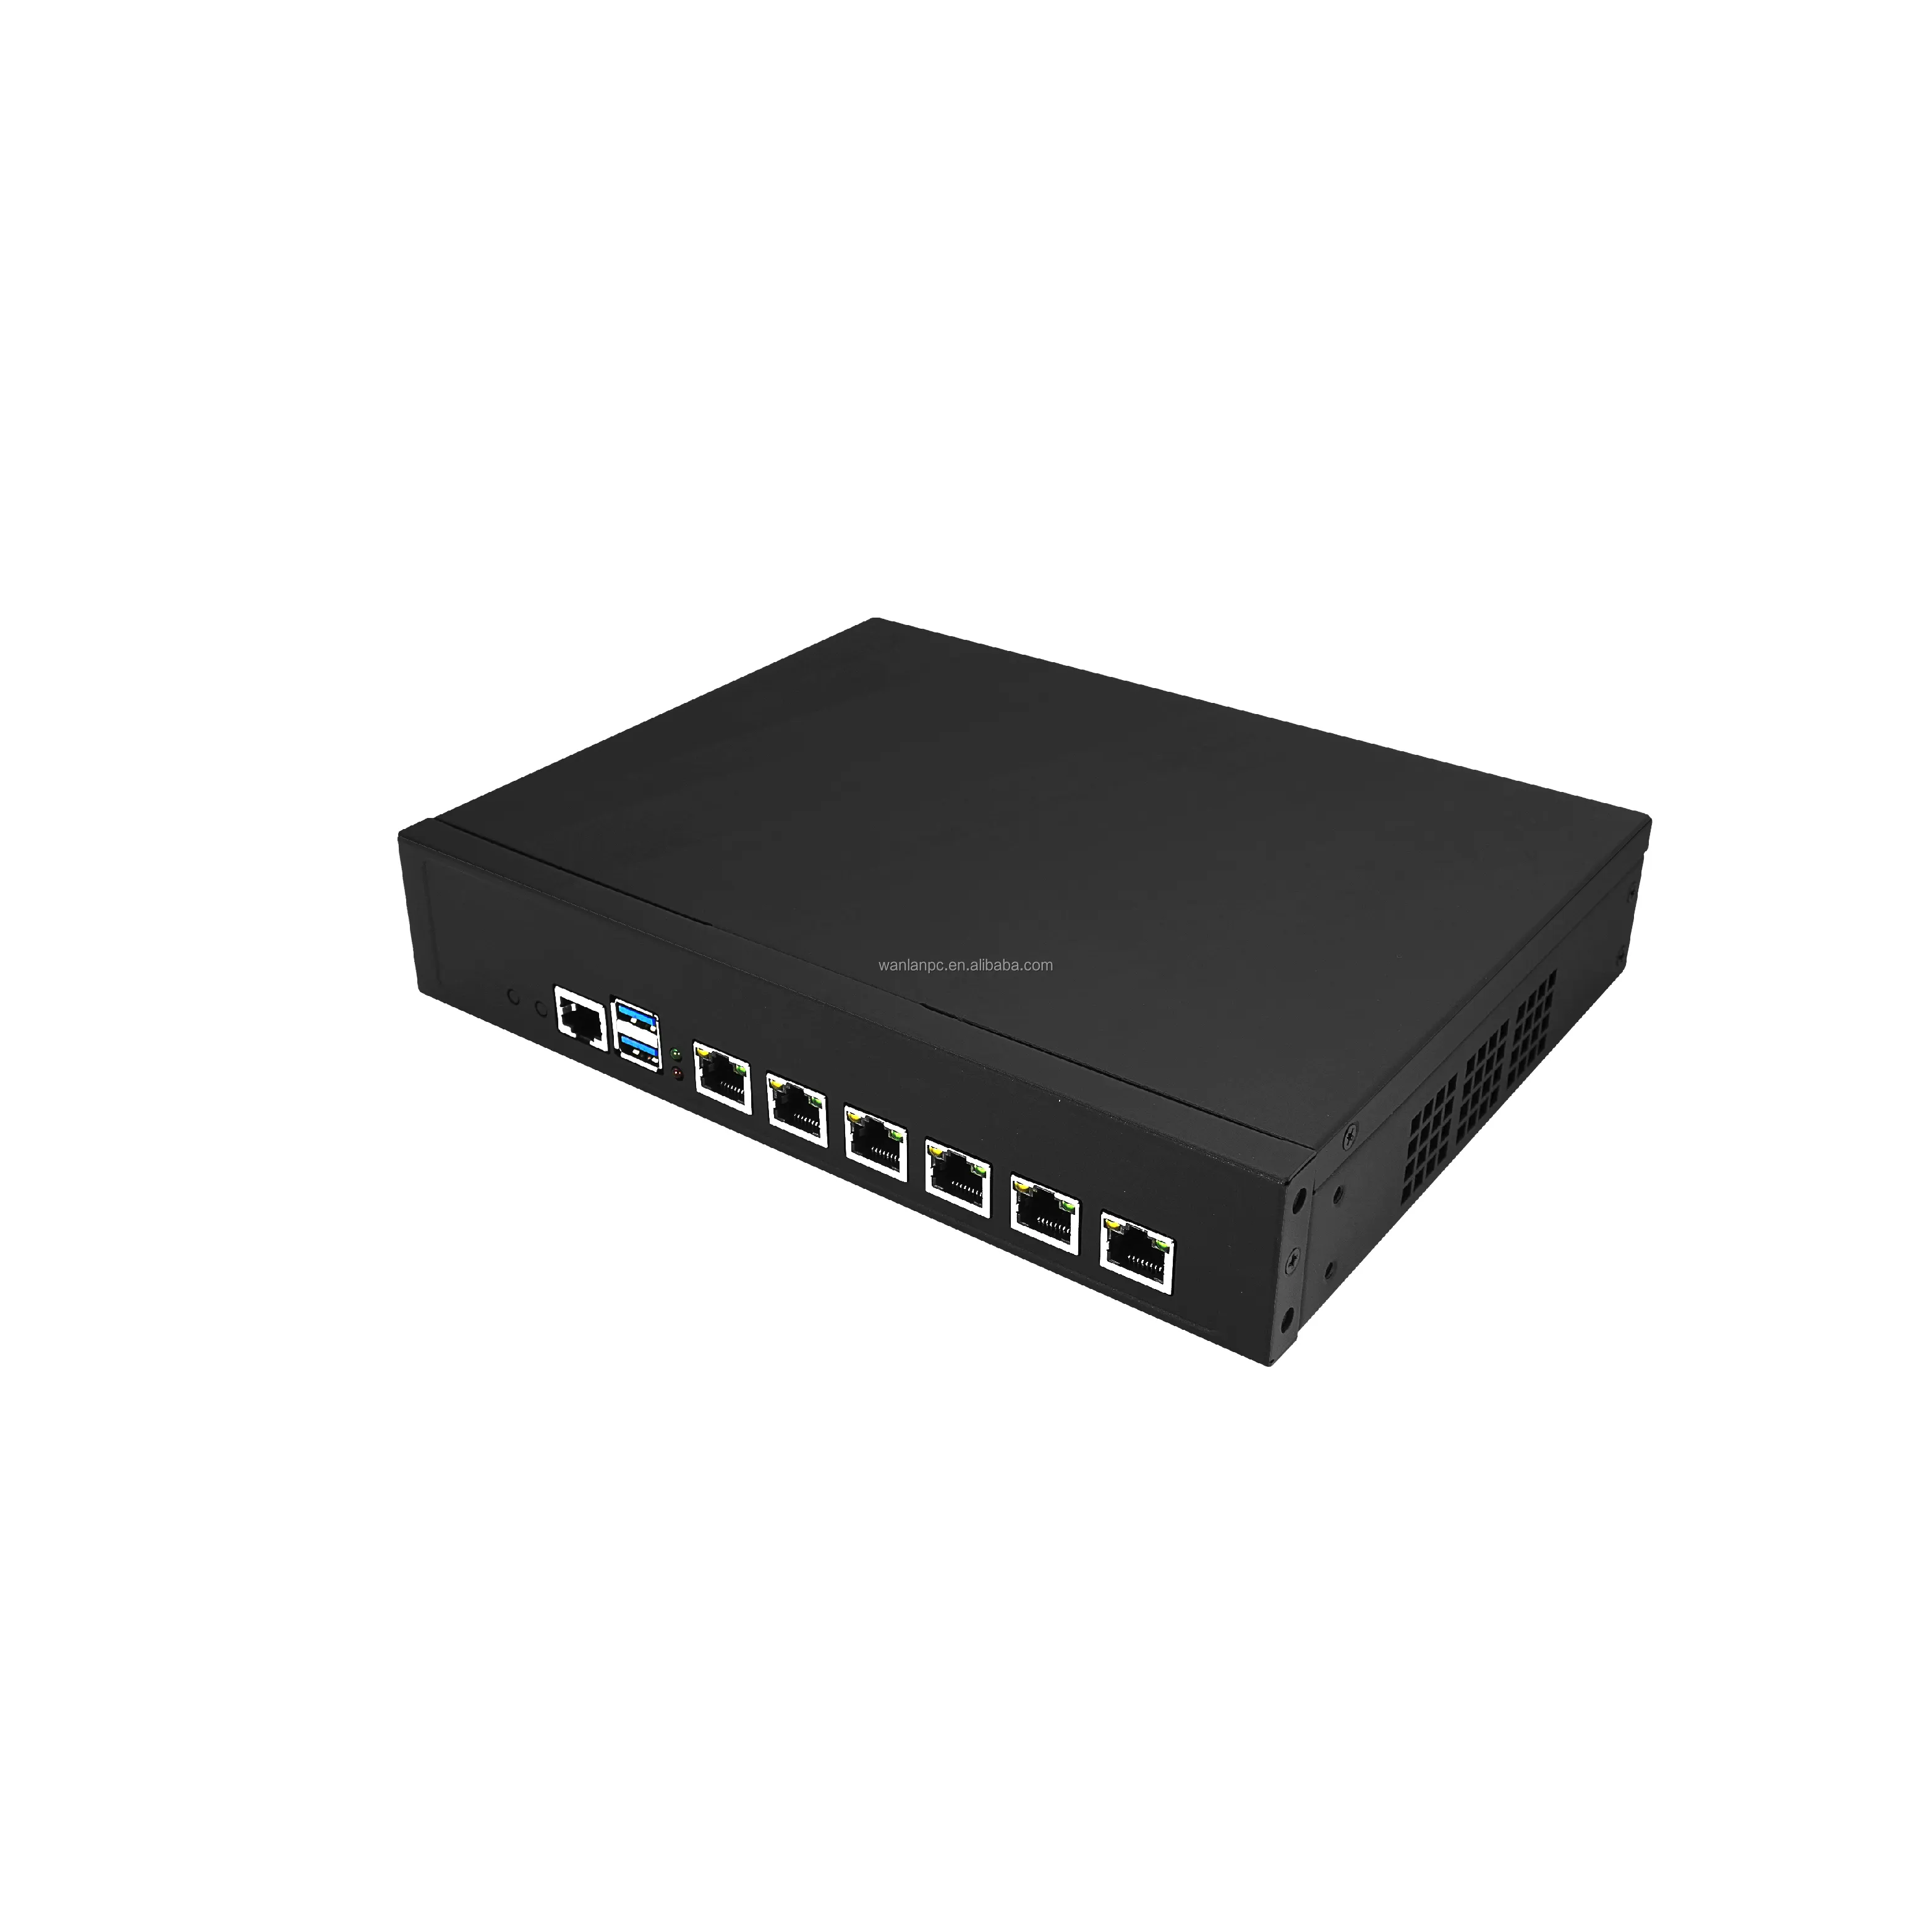 6 LAN Desktop System N5105 i225 with Fan 6X i225V 2.5G Linux server 6 NIC firewall appliance support pfSense OPNsense router